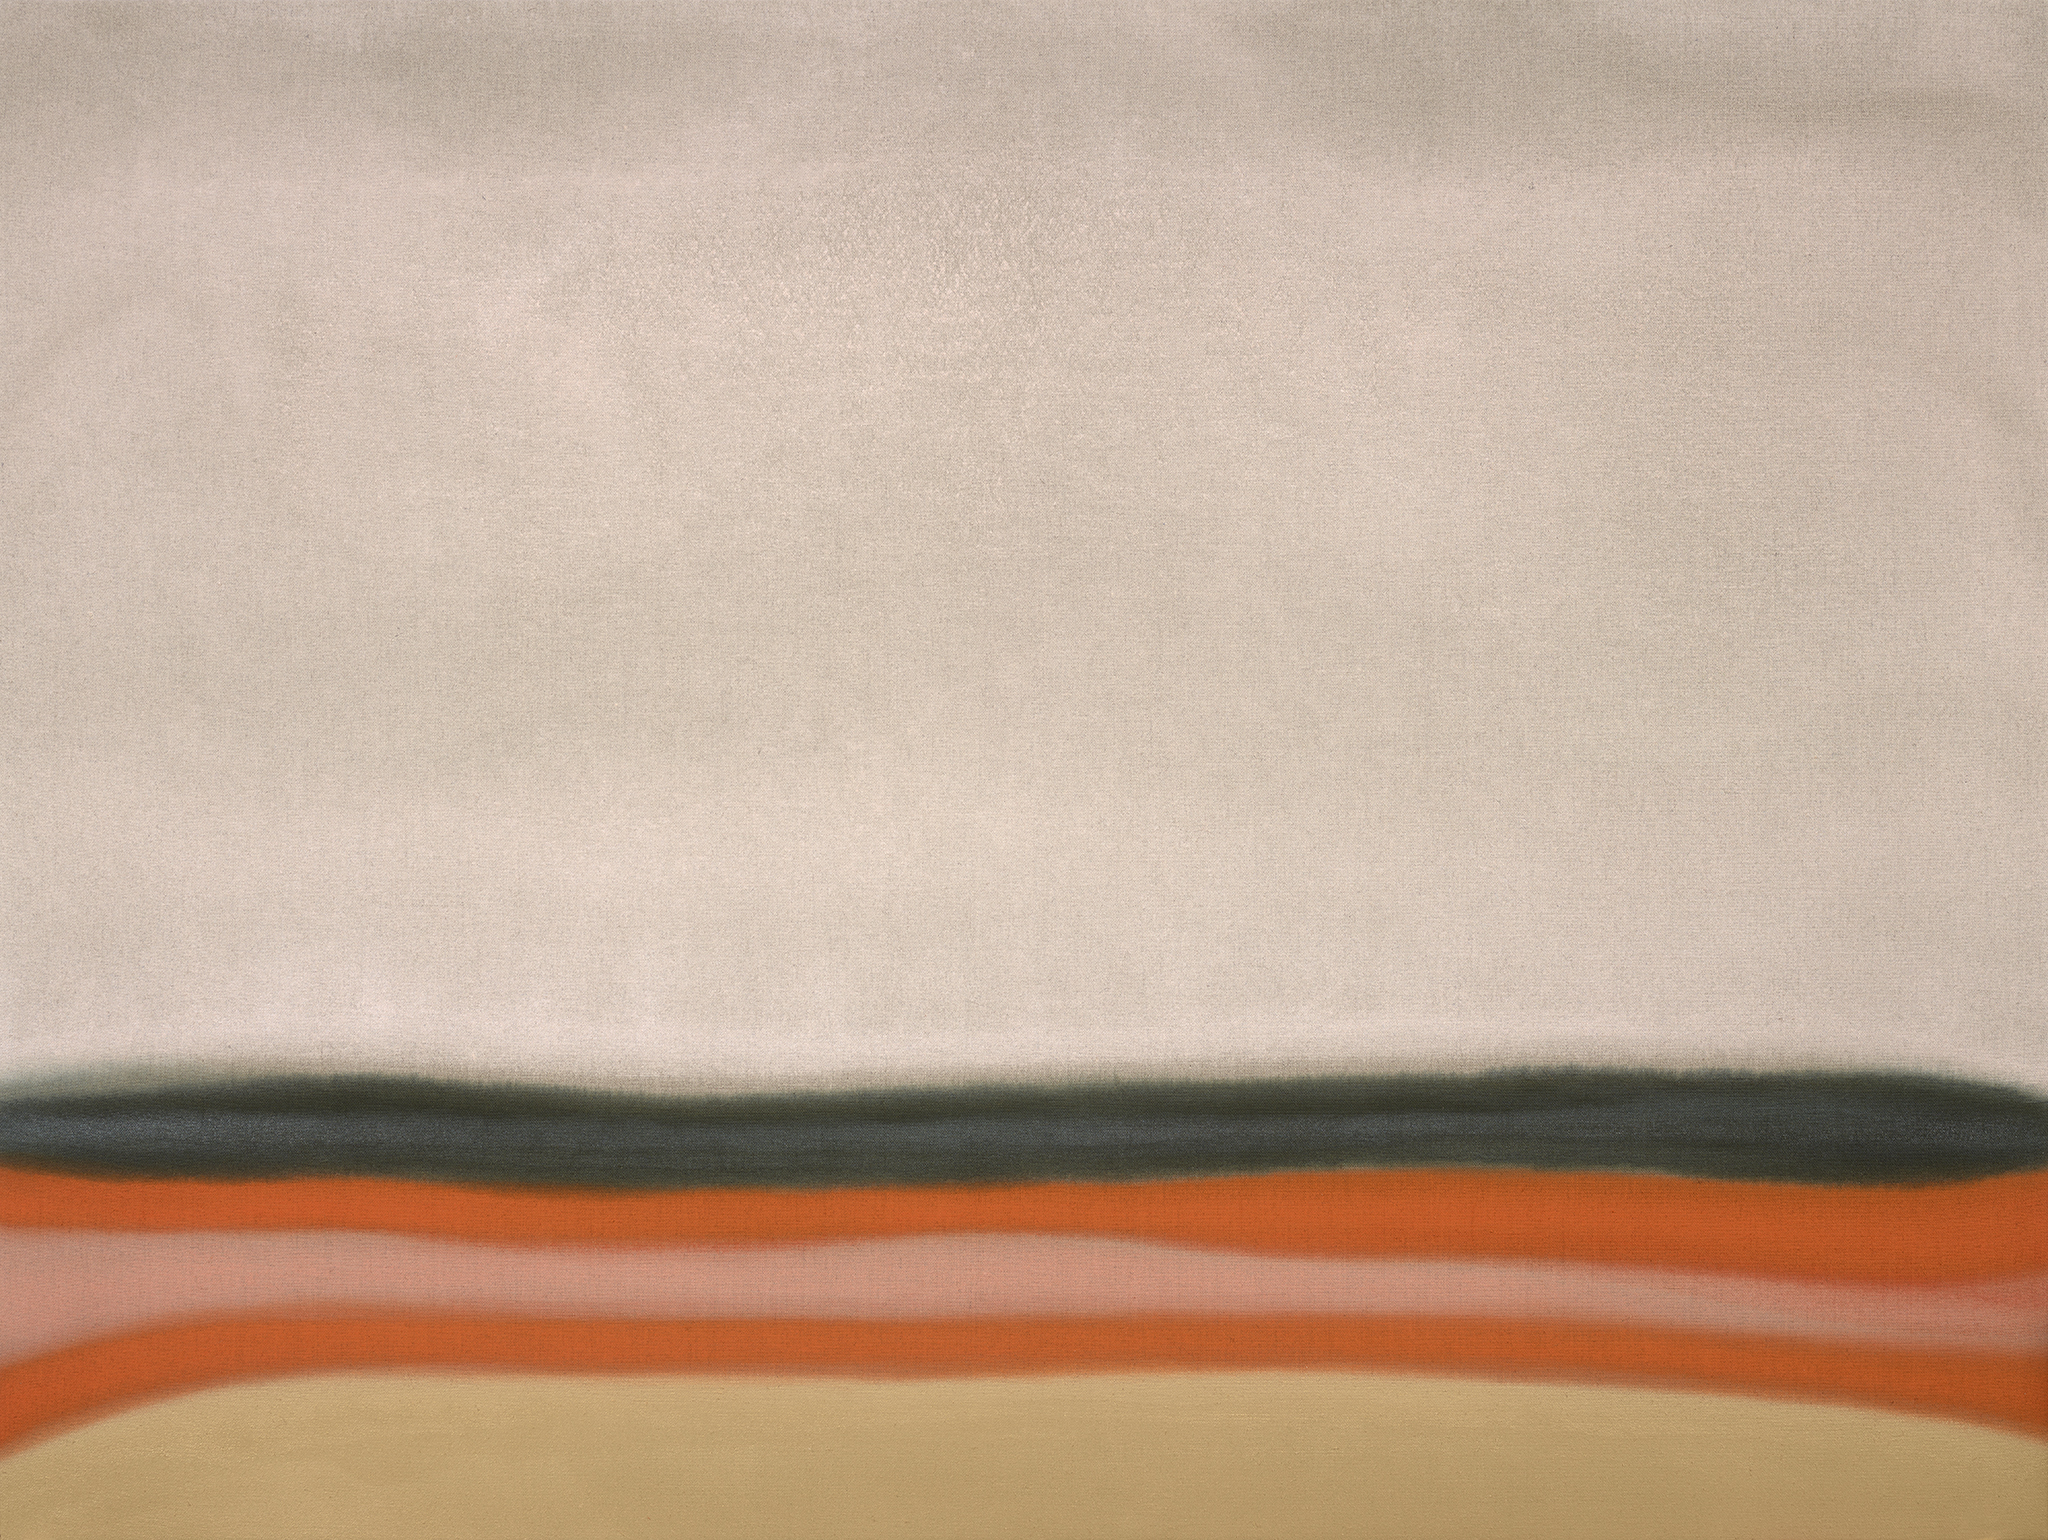 Untitled (Orange/Green), 2018. Oil on Linen, 56" x 74".